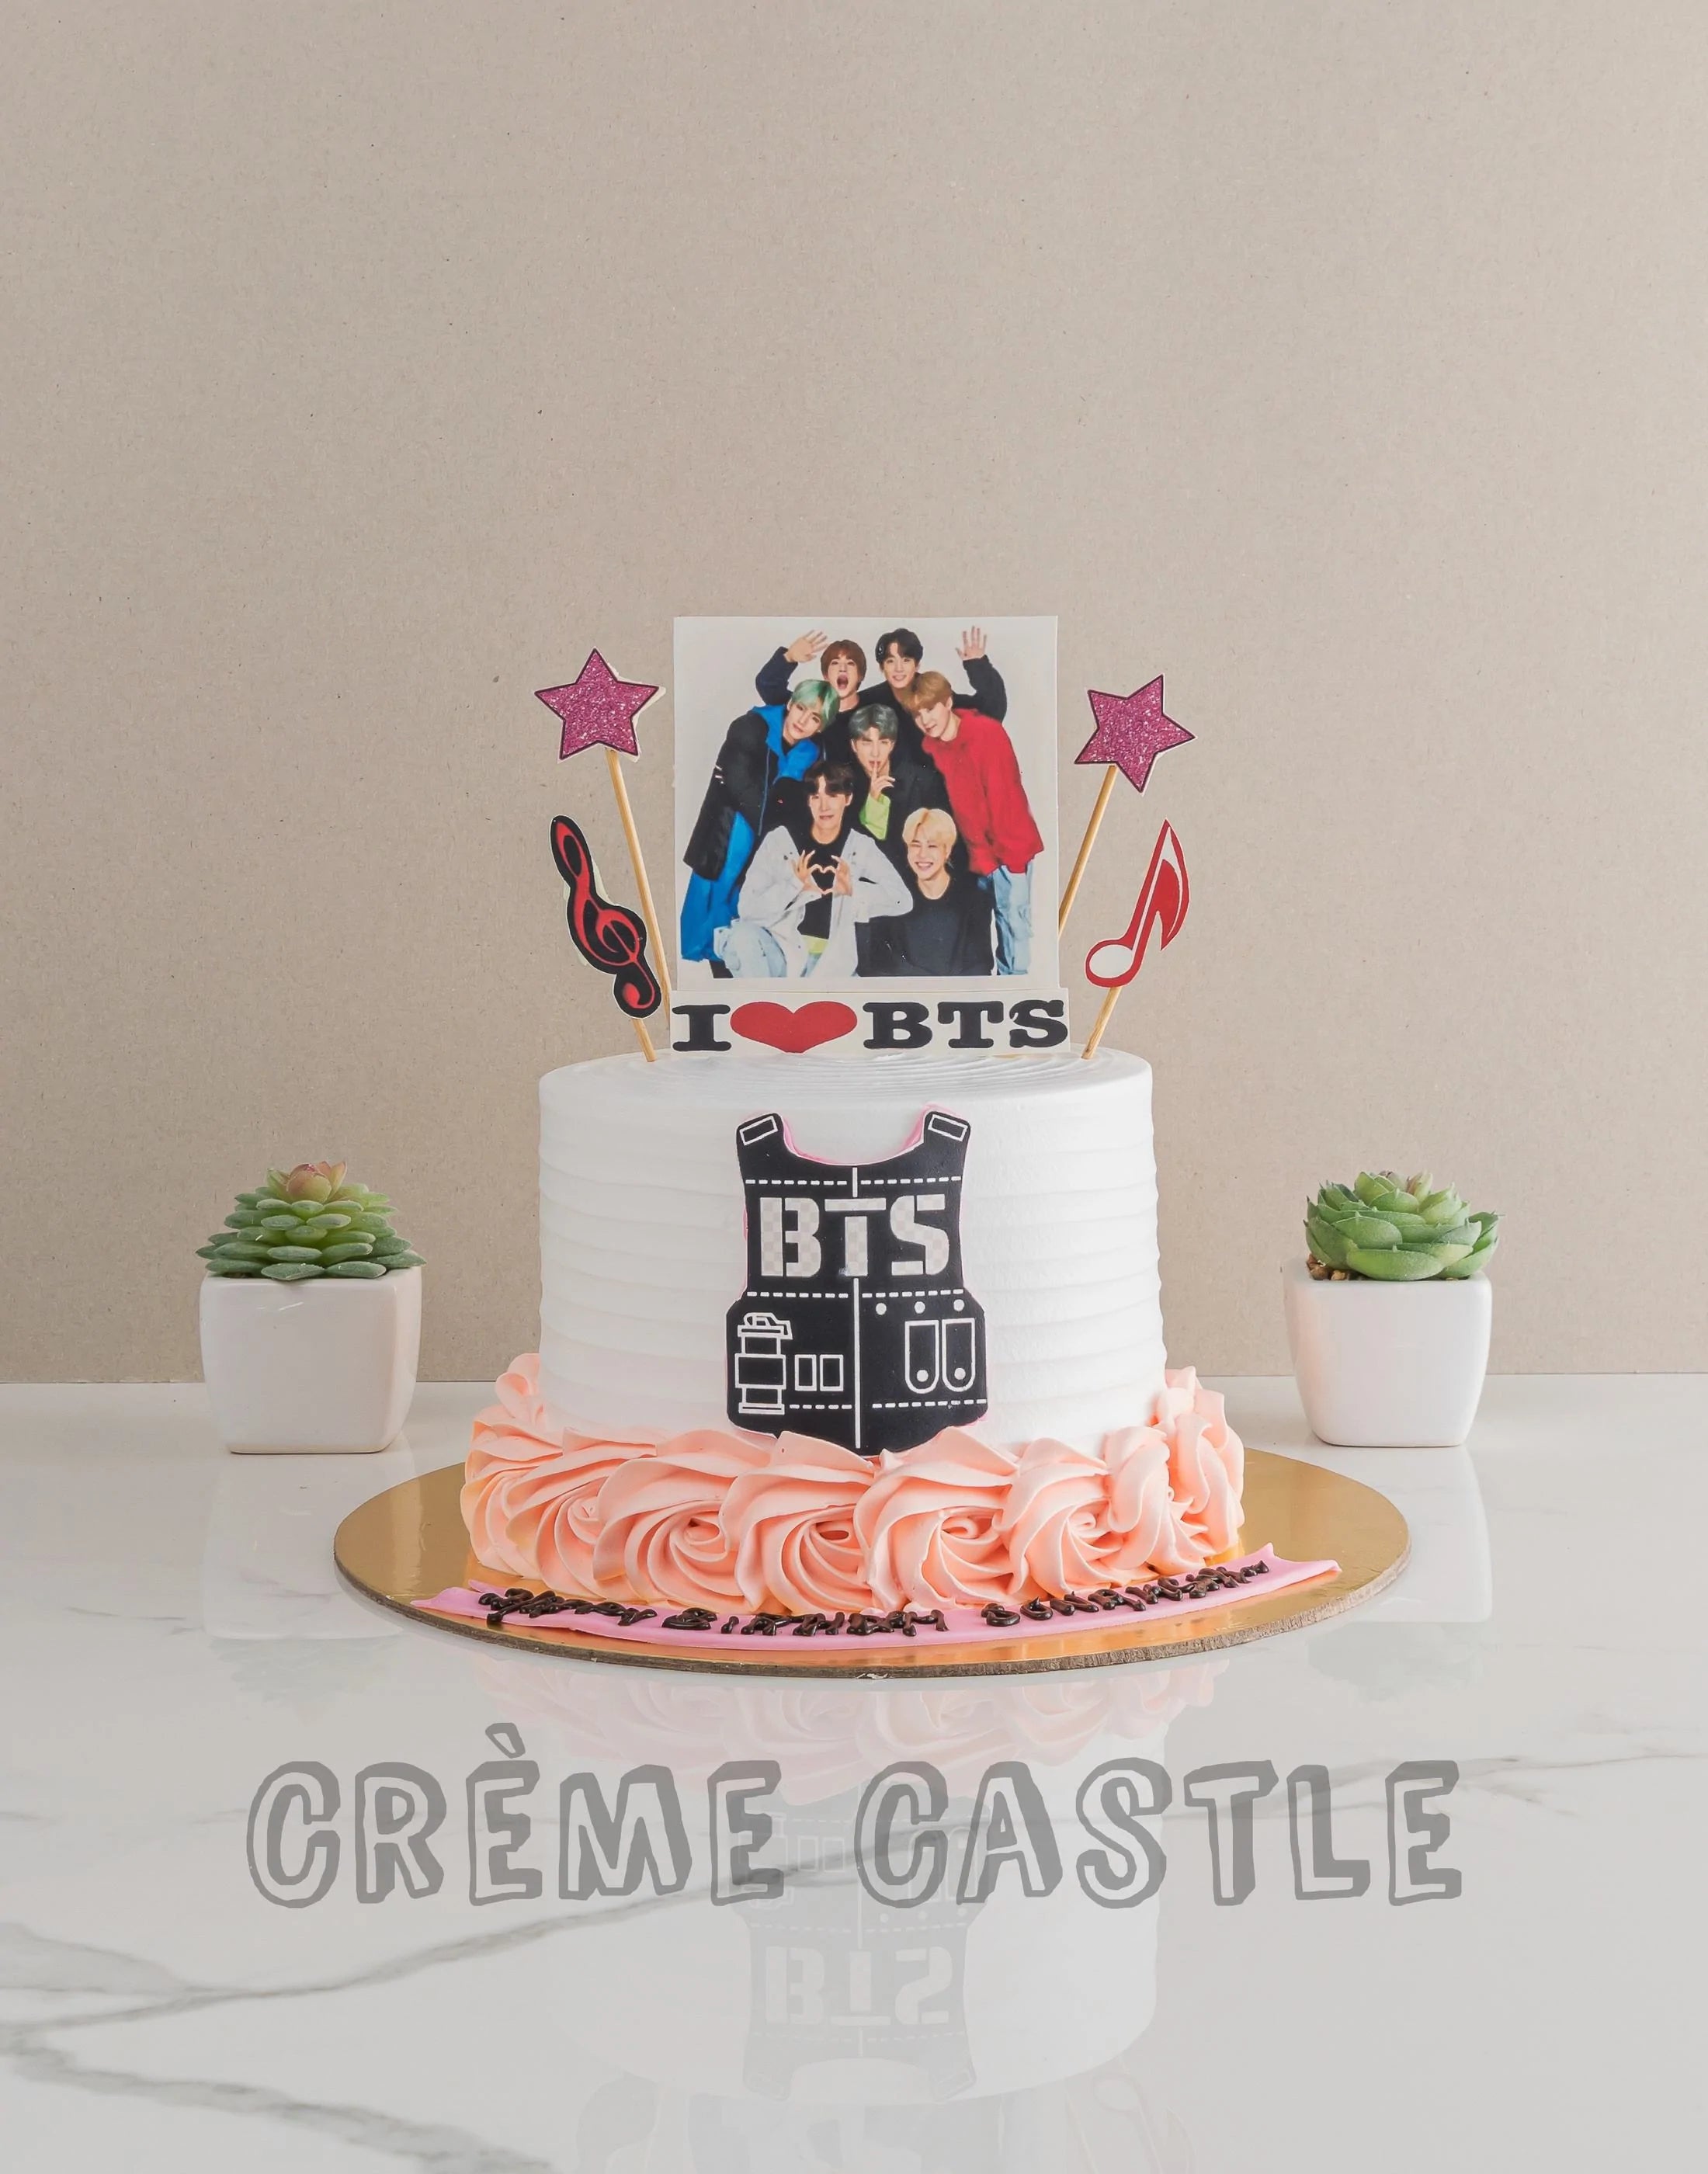 BTS Theme Cake | Bts cake, Themed cakes, Army birthday cakes